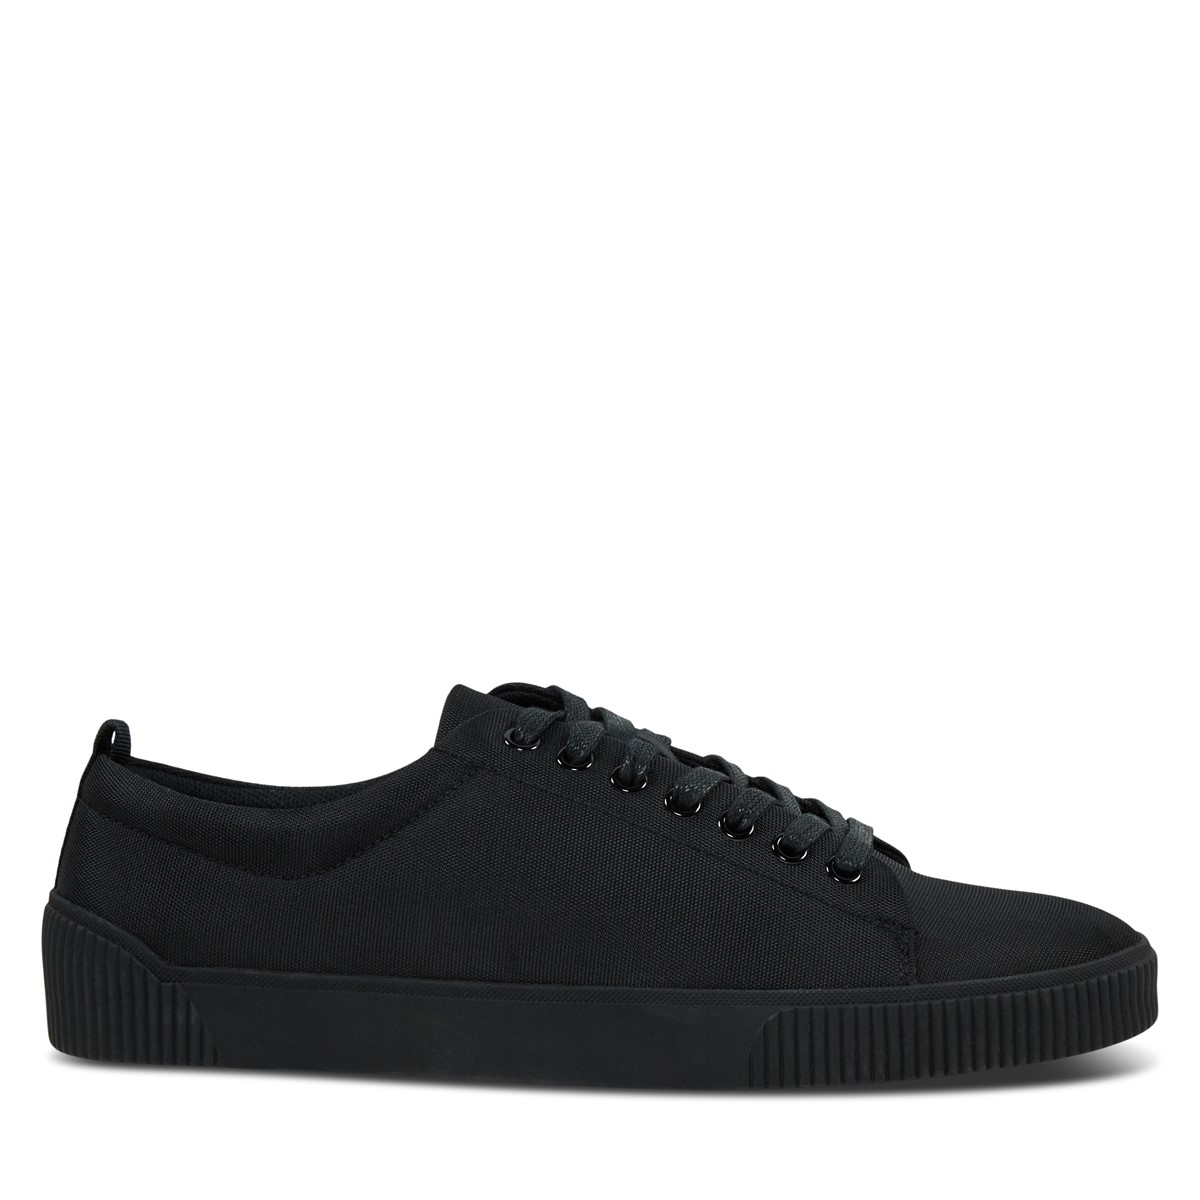 Men's Enzo Sneakers in Black